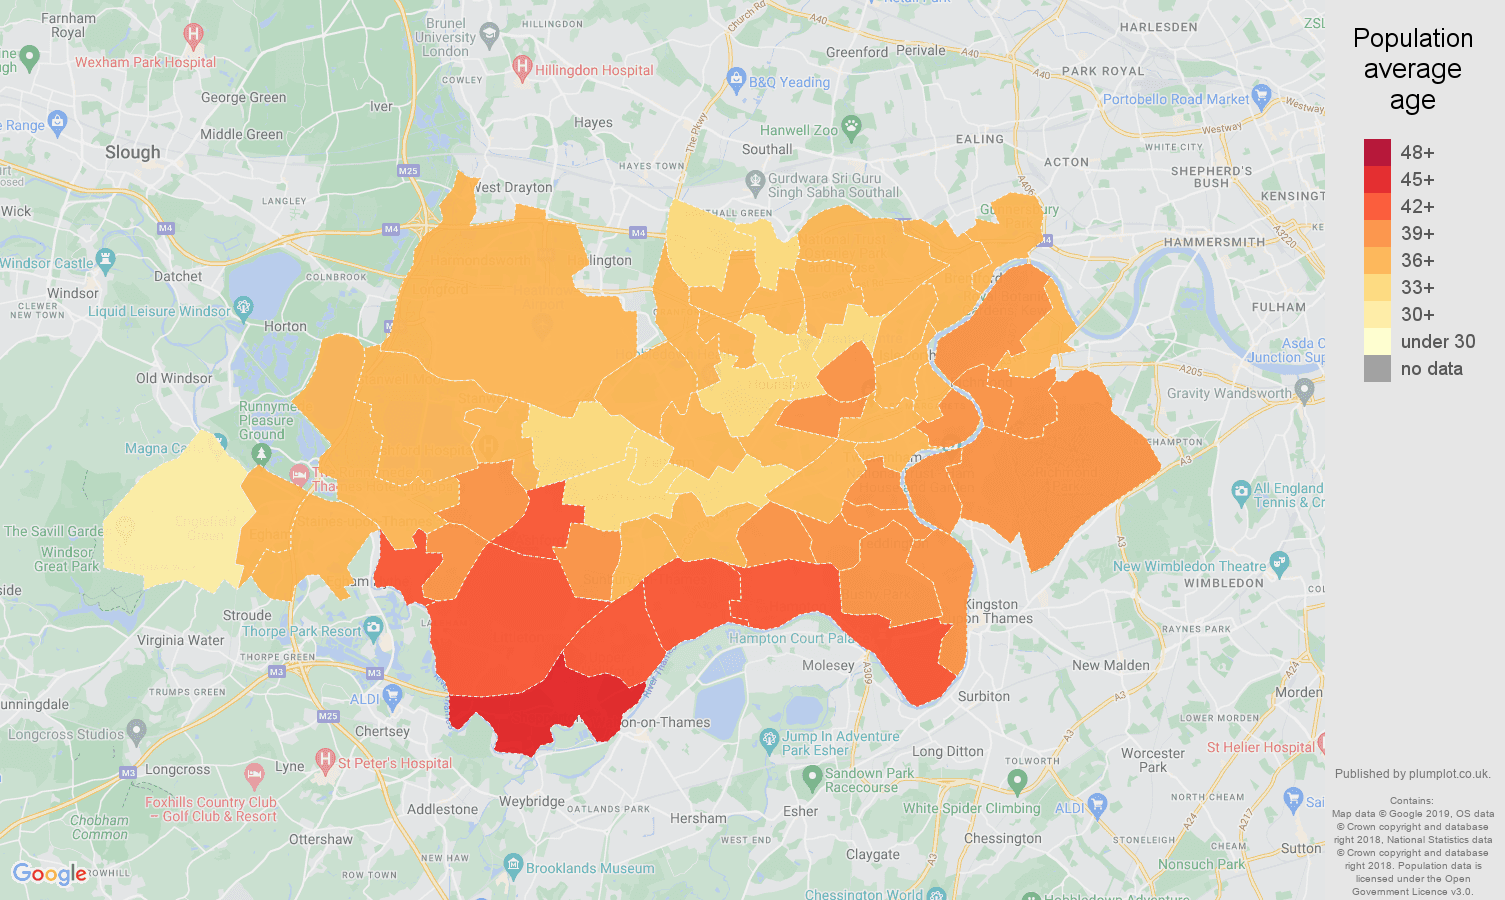 Twickenham population average age map